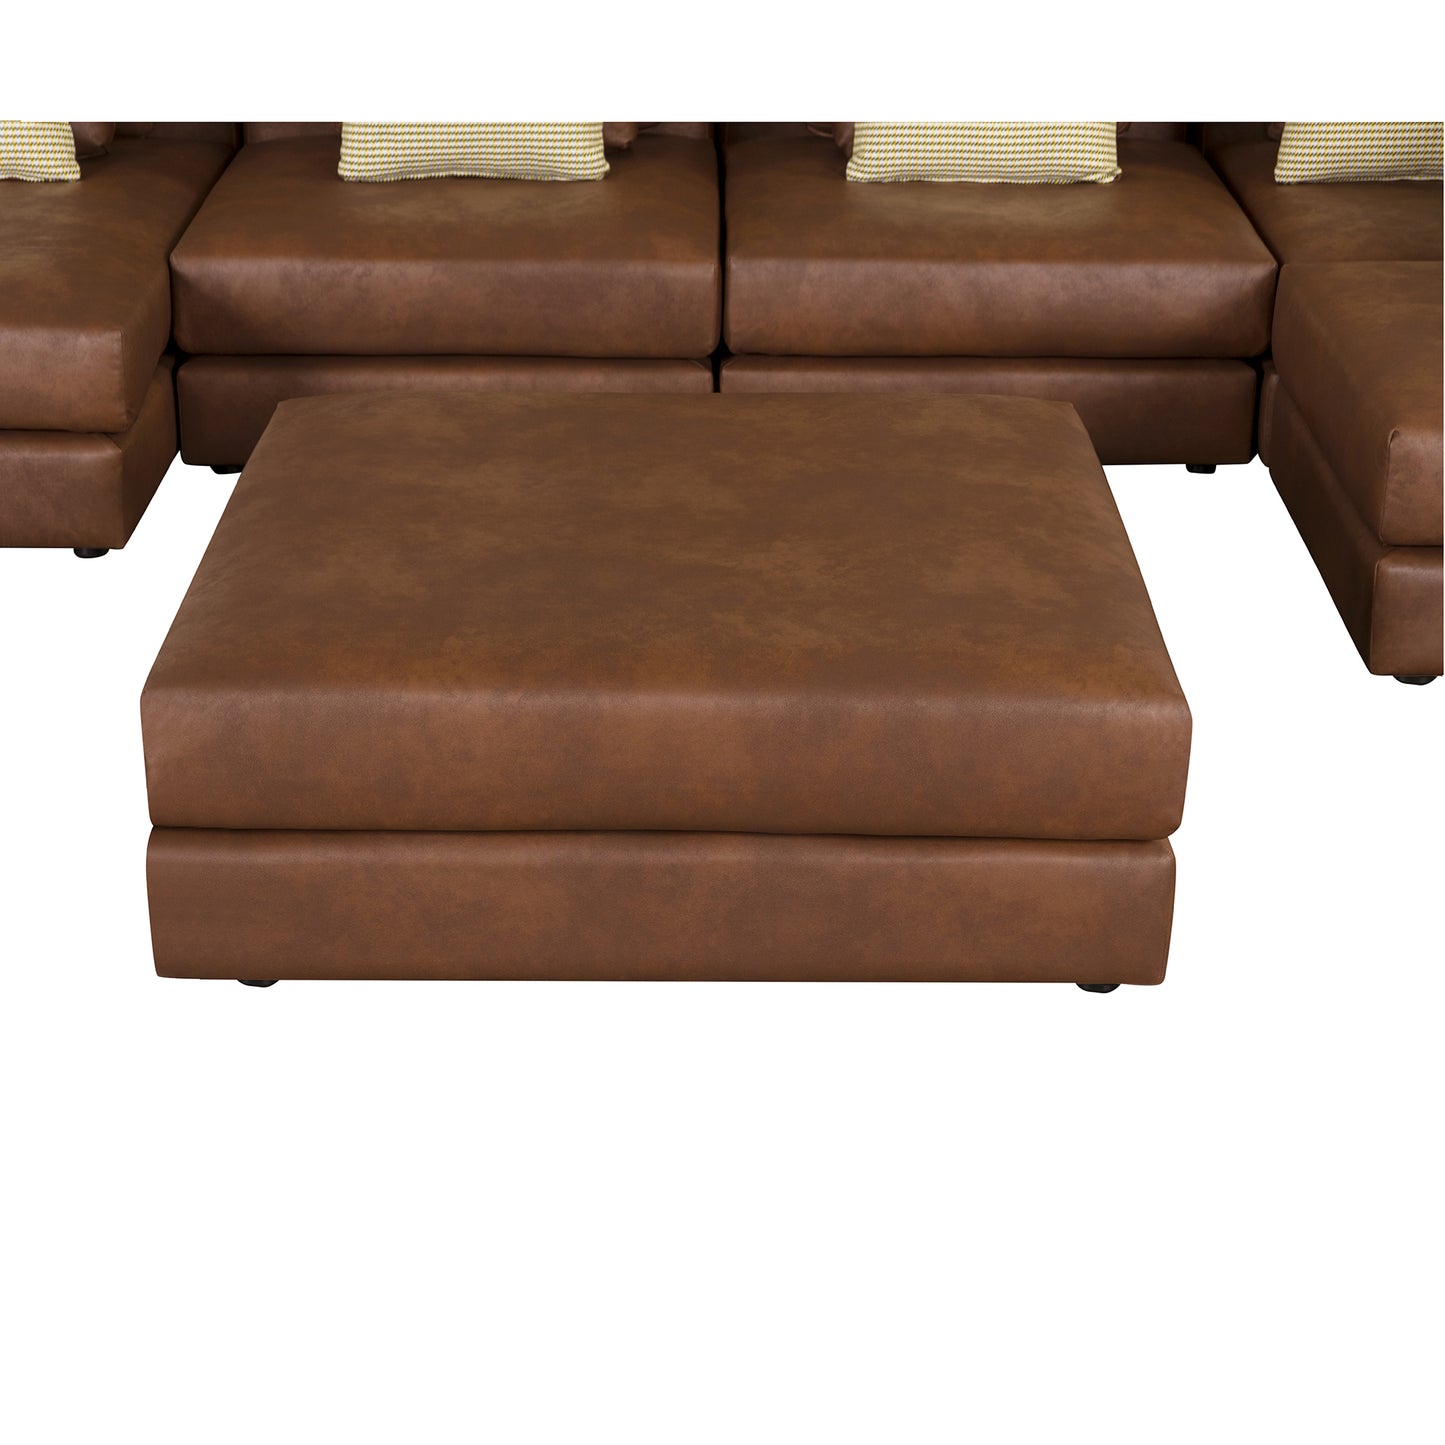 Basit Collection Modular Sectional Lounge Sofa with Ottoman